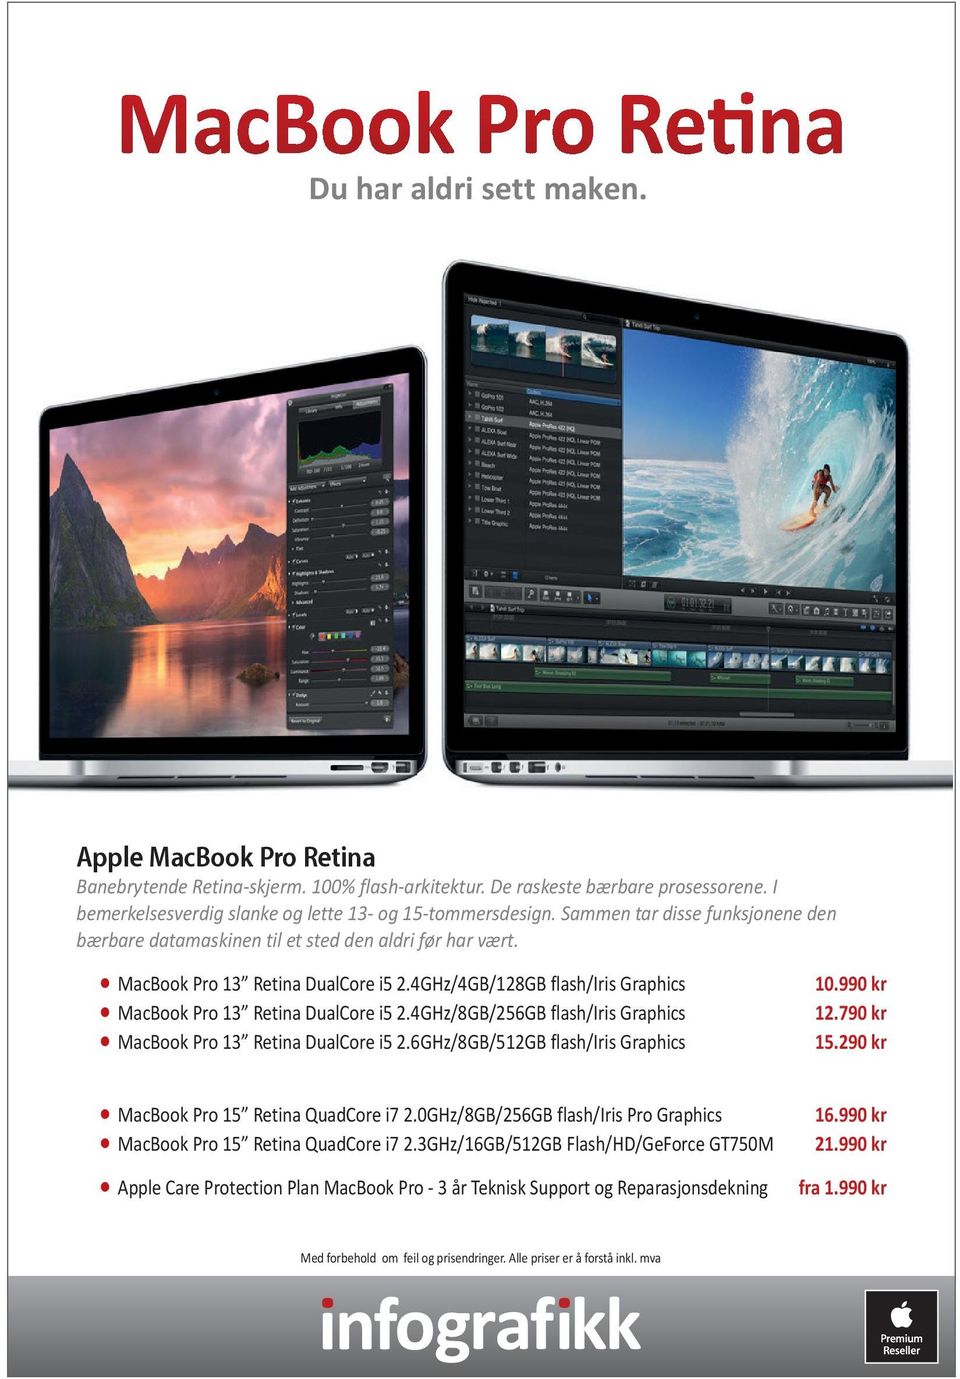 4GHz/4GB/128GB flash/iris Graphics MacBook Pro 13 Retina DualCore i5 2.4GHz/8GB/256GB flash/iris Graphics MacBook Pro 13 Retina DualCore i5 2.6GHz/8GB/512GB flash/iris Graphics 10.990 kr 12.790 kr 15.